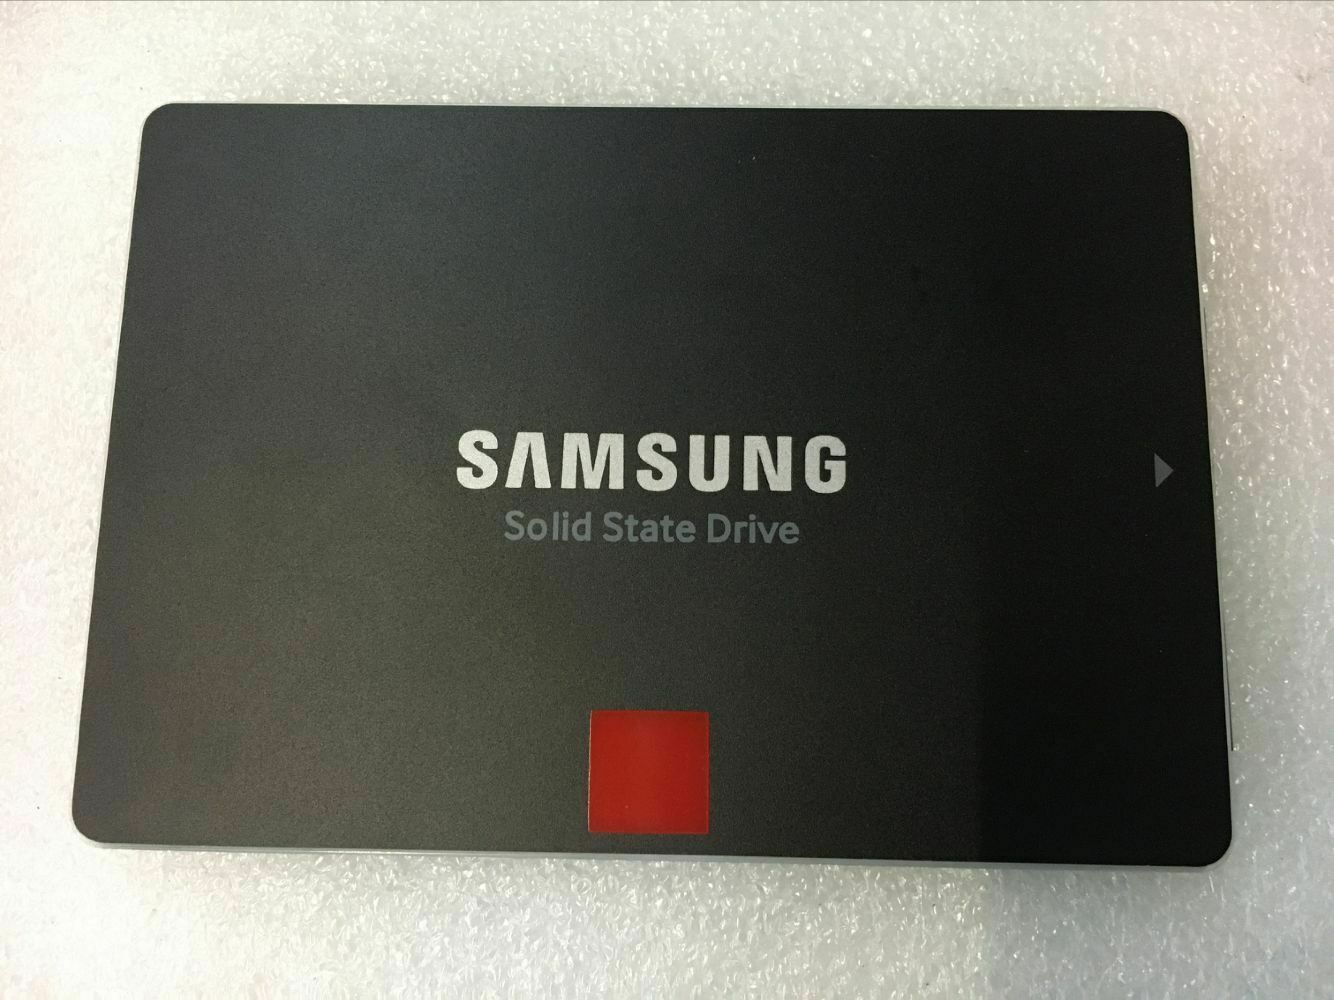 Samsung 860 Pro 512GB Internal 2.5 inch MZ-76P512 SATAIII 7mm Solid State Drive - USADO.